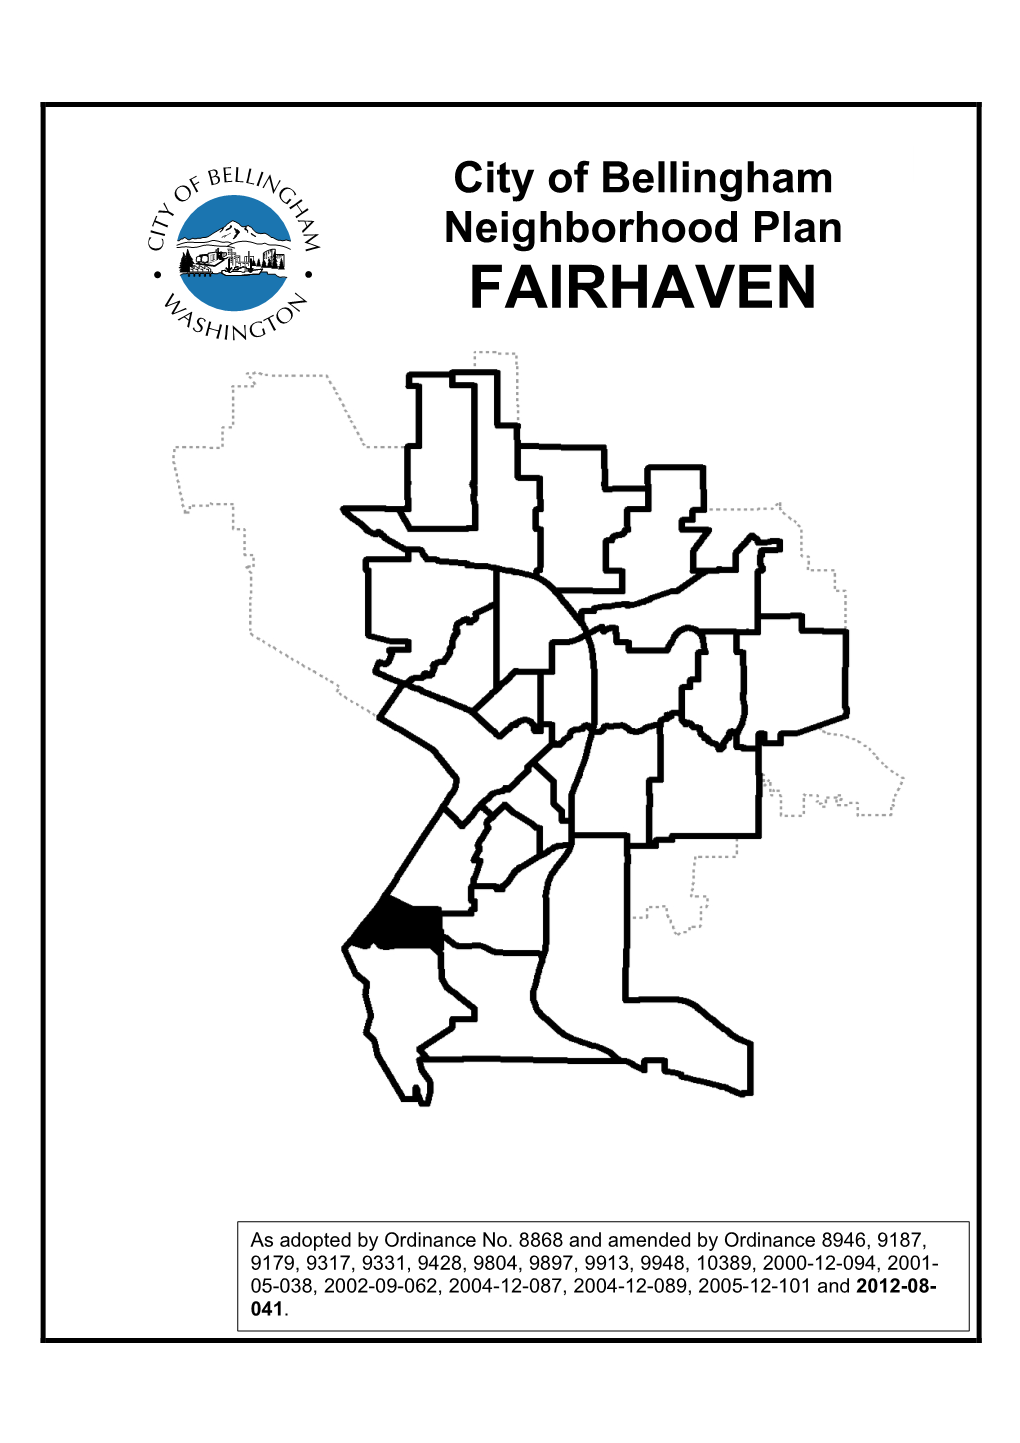 Fairhaven Neighborhood and Urban Village Plan (3074K PDF)